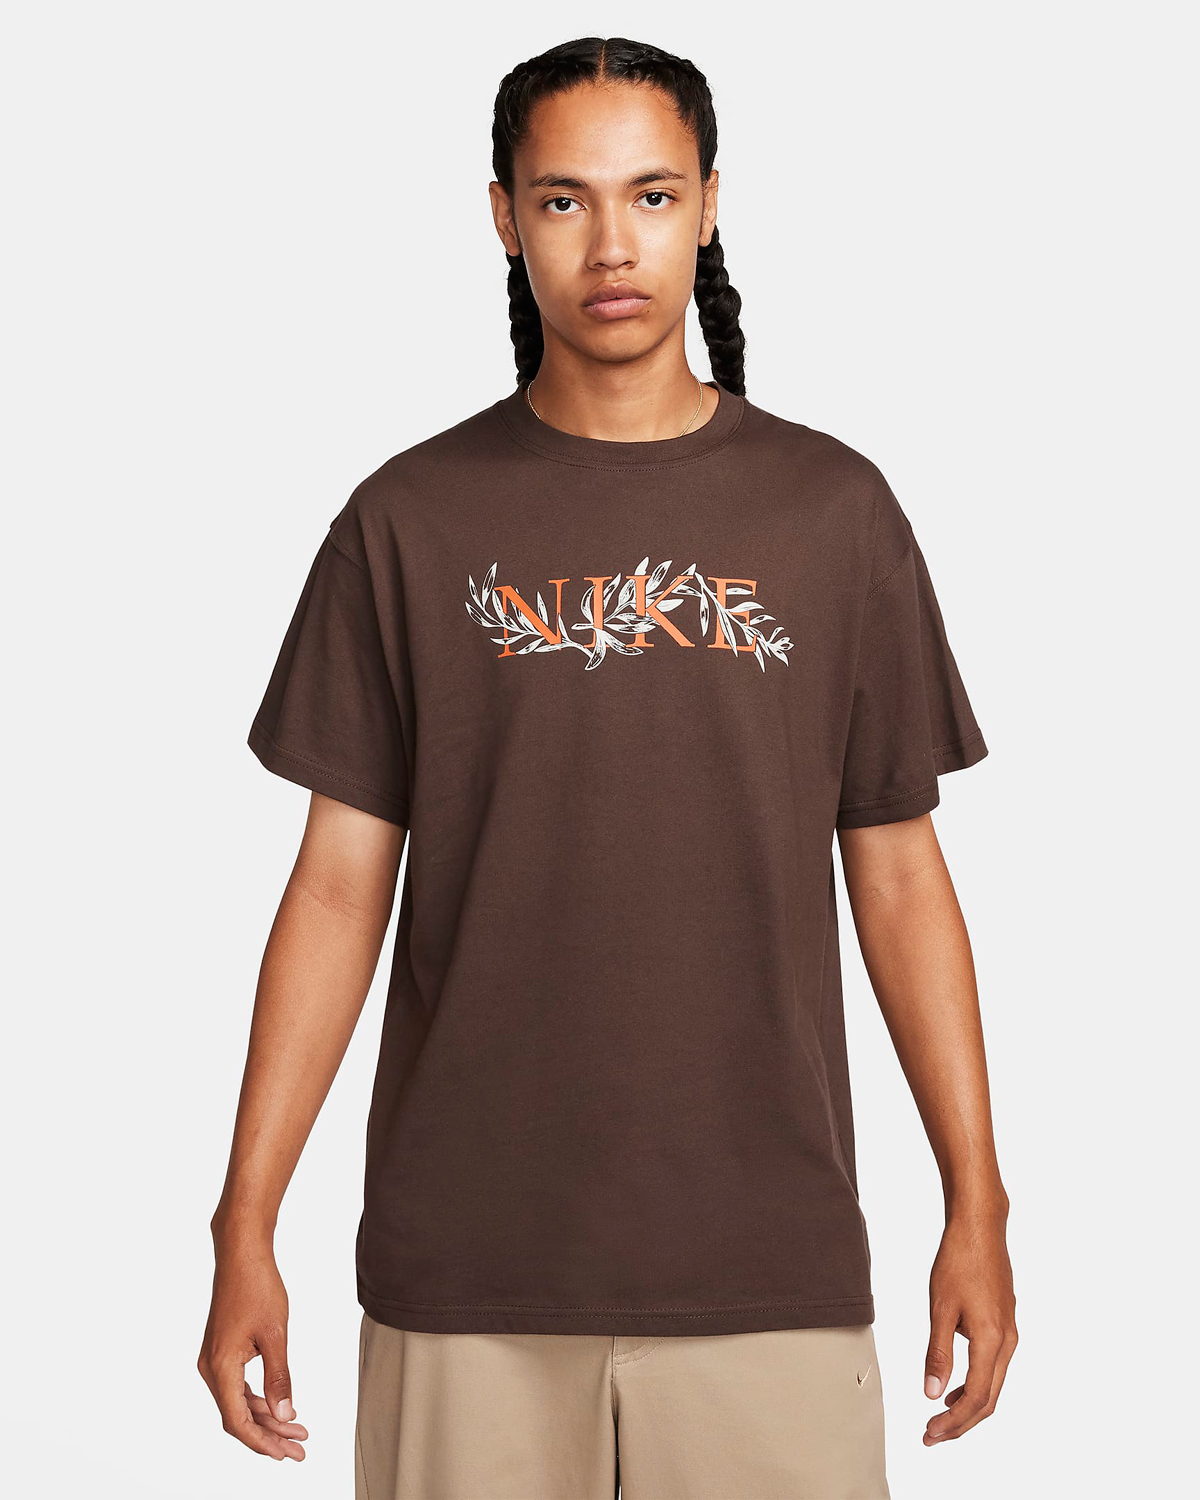 Nike-Sportswear-Max90-T-Shirt-Baroque-Brown-1